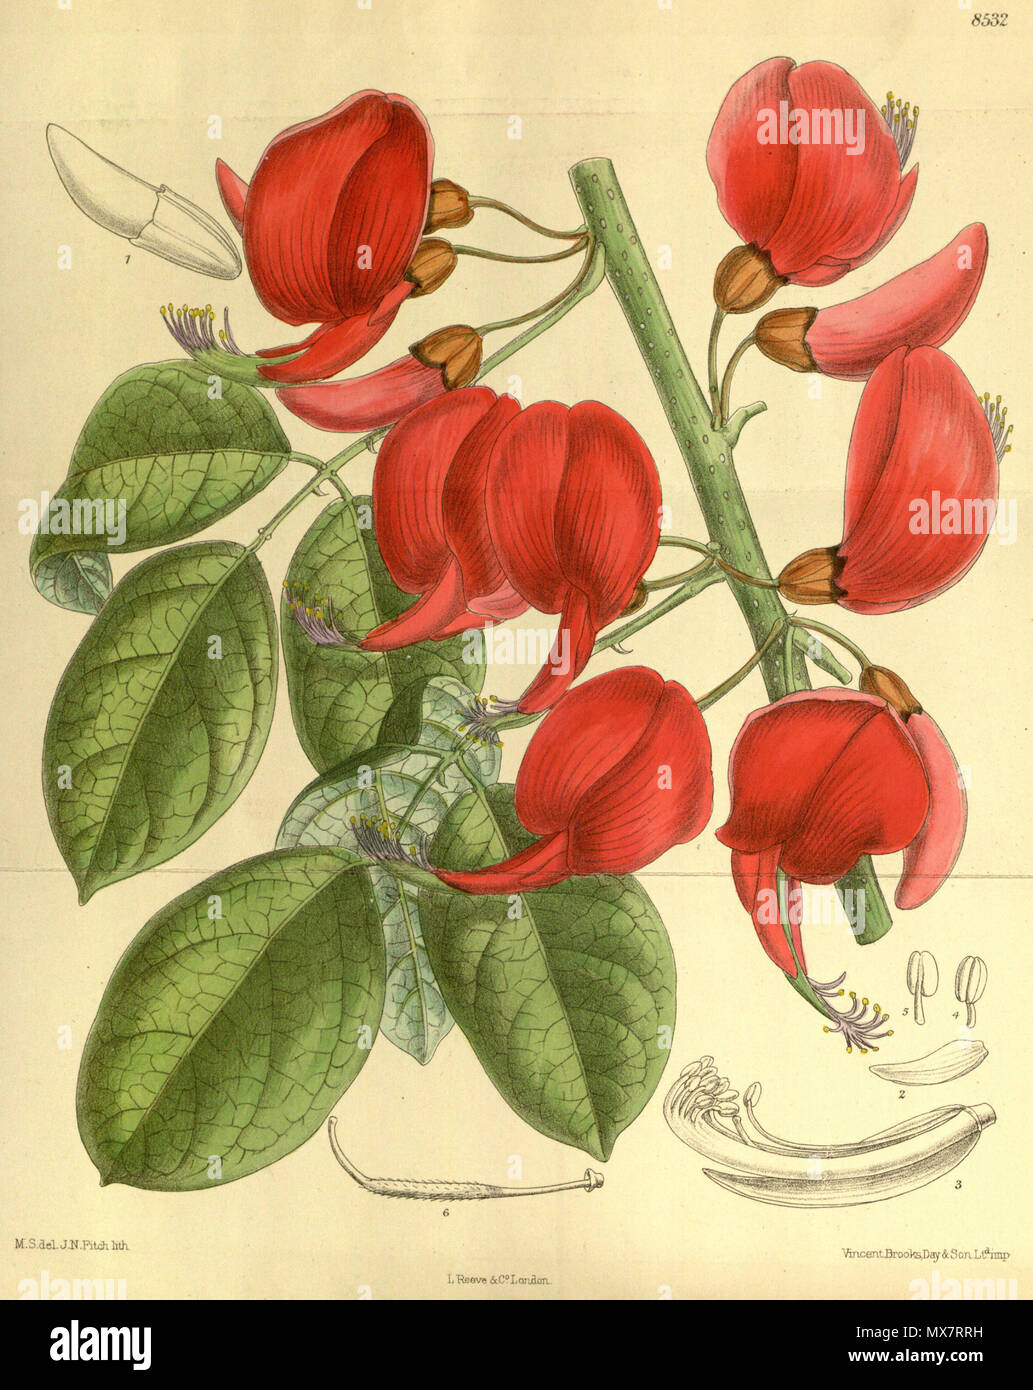 . Erythrina pulcherrima (= Erythrina crista-galli), Fabaceae . 1914. M.S. del., J.N.Fitch lith. 195 Erythrina pulcherrima 140-8532 Stock Photo